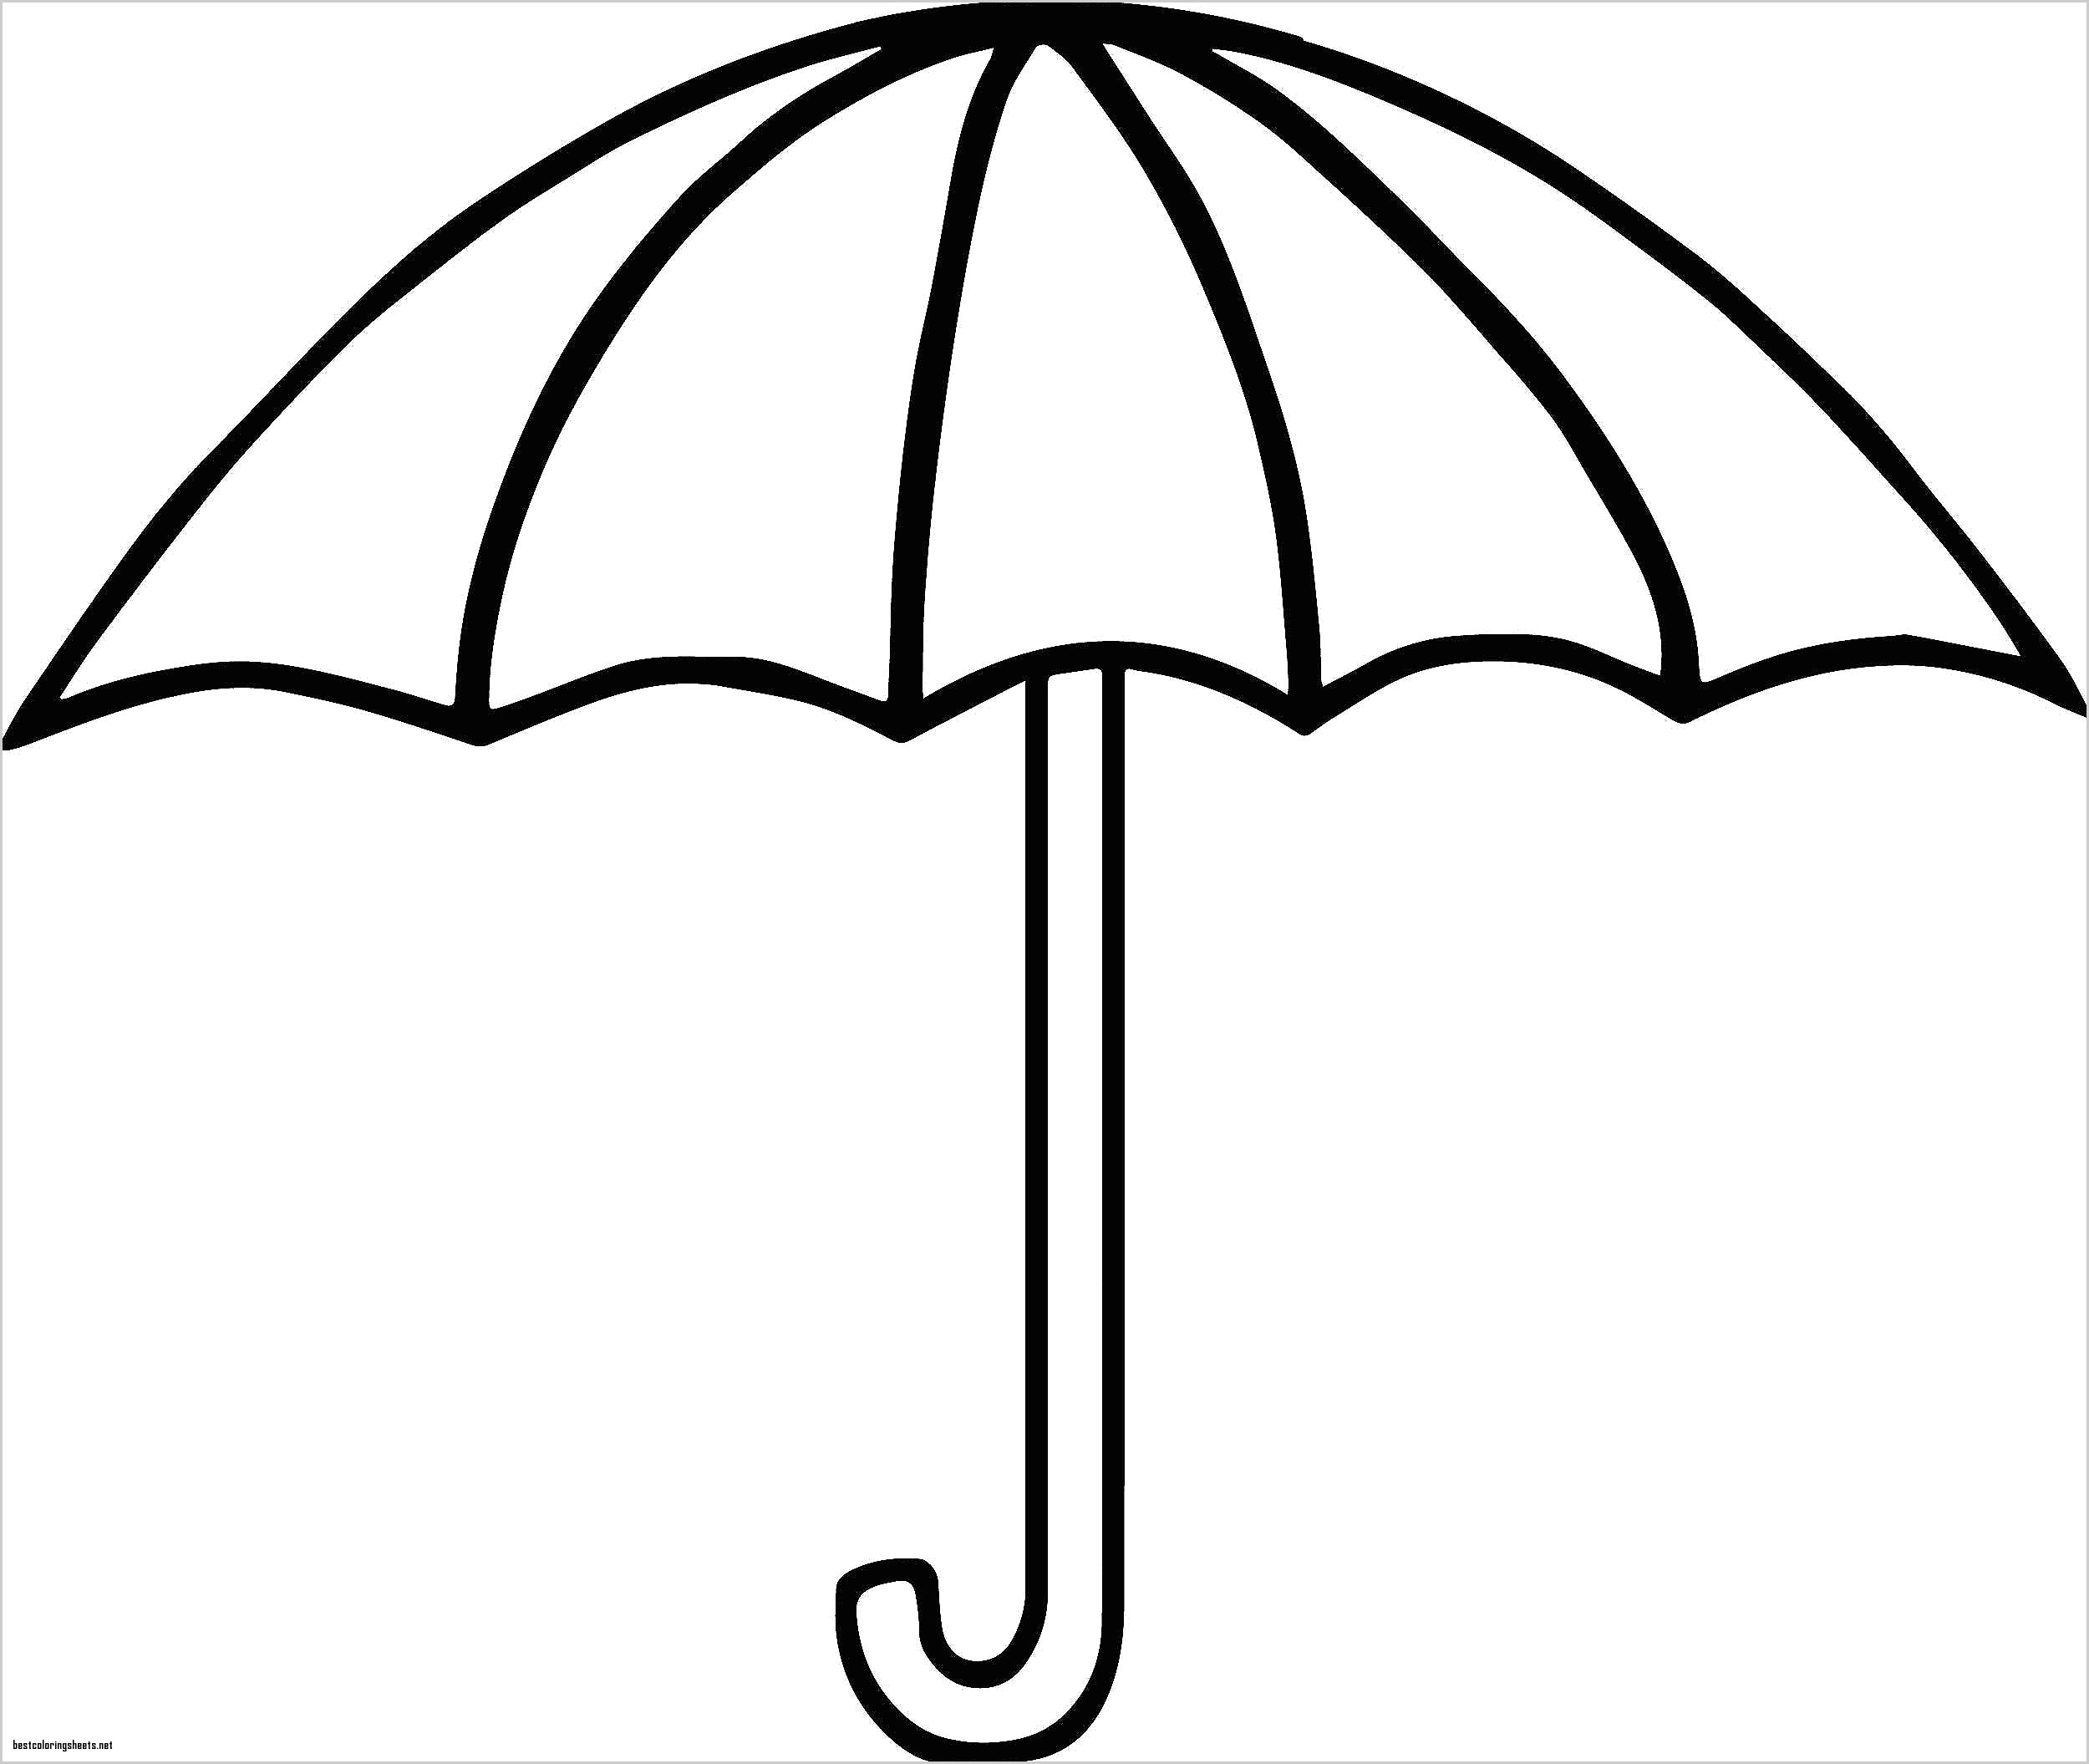 Umbrella template printable.